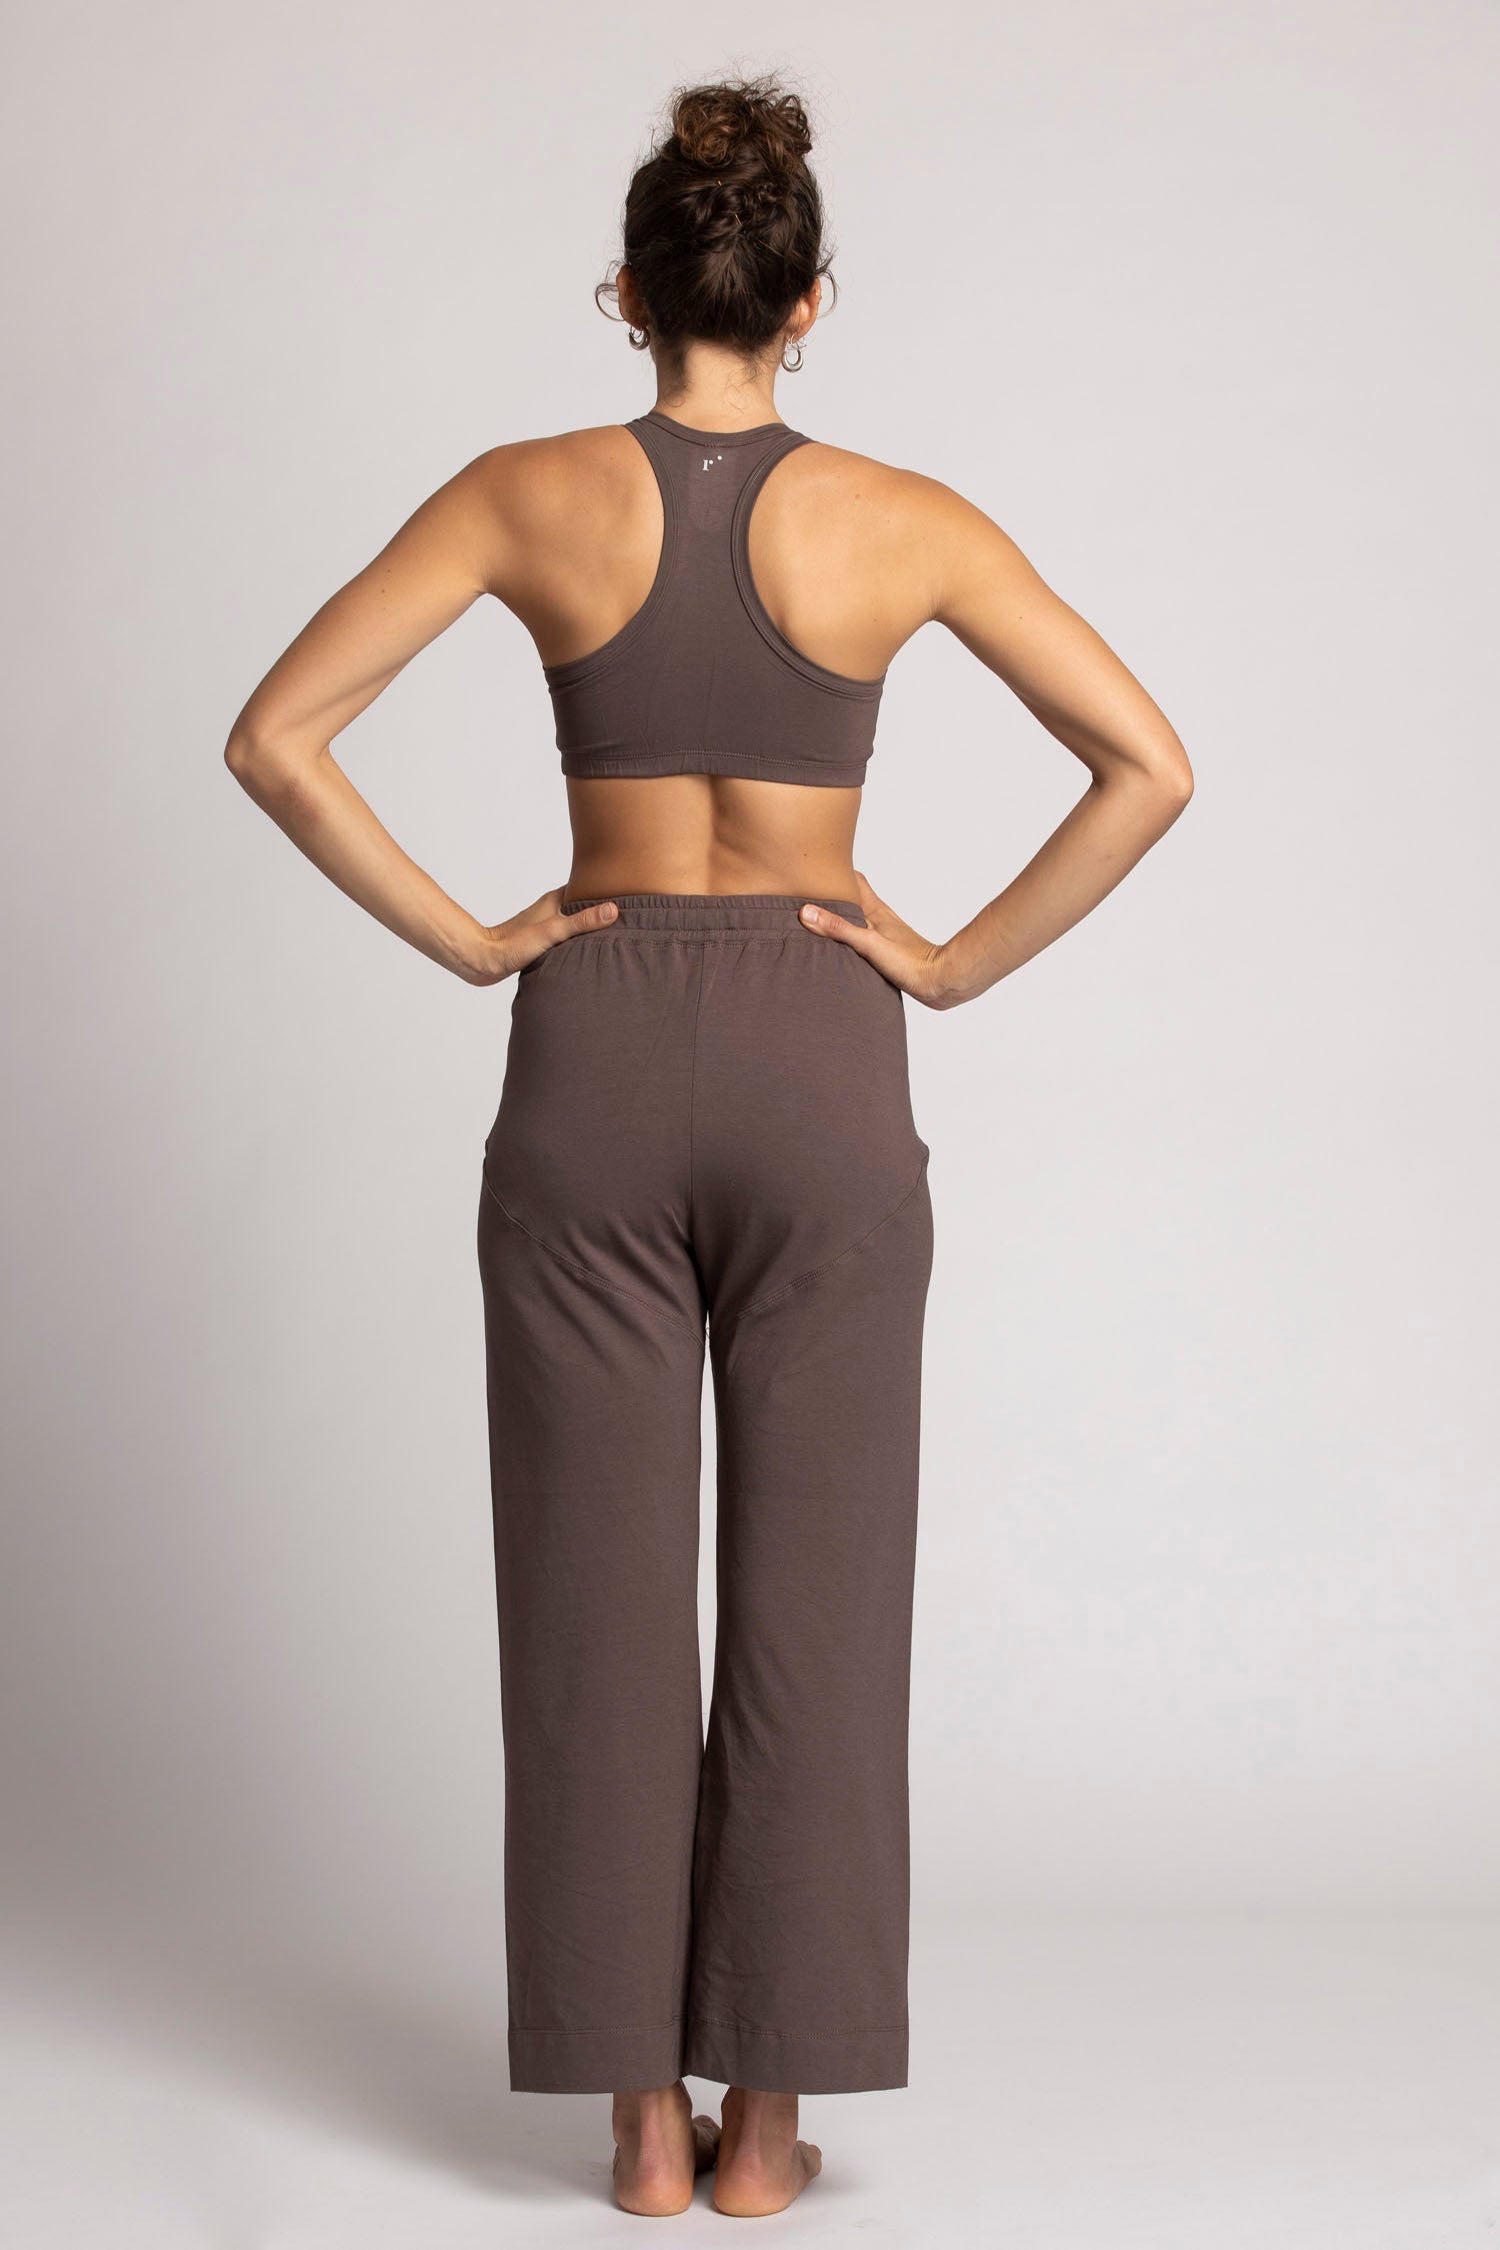 PIMOXV Fashion Women Summer Solid Yoga Pants Net Yarn India